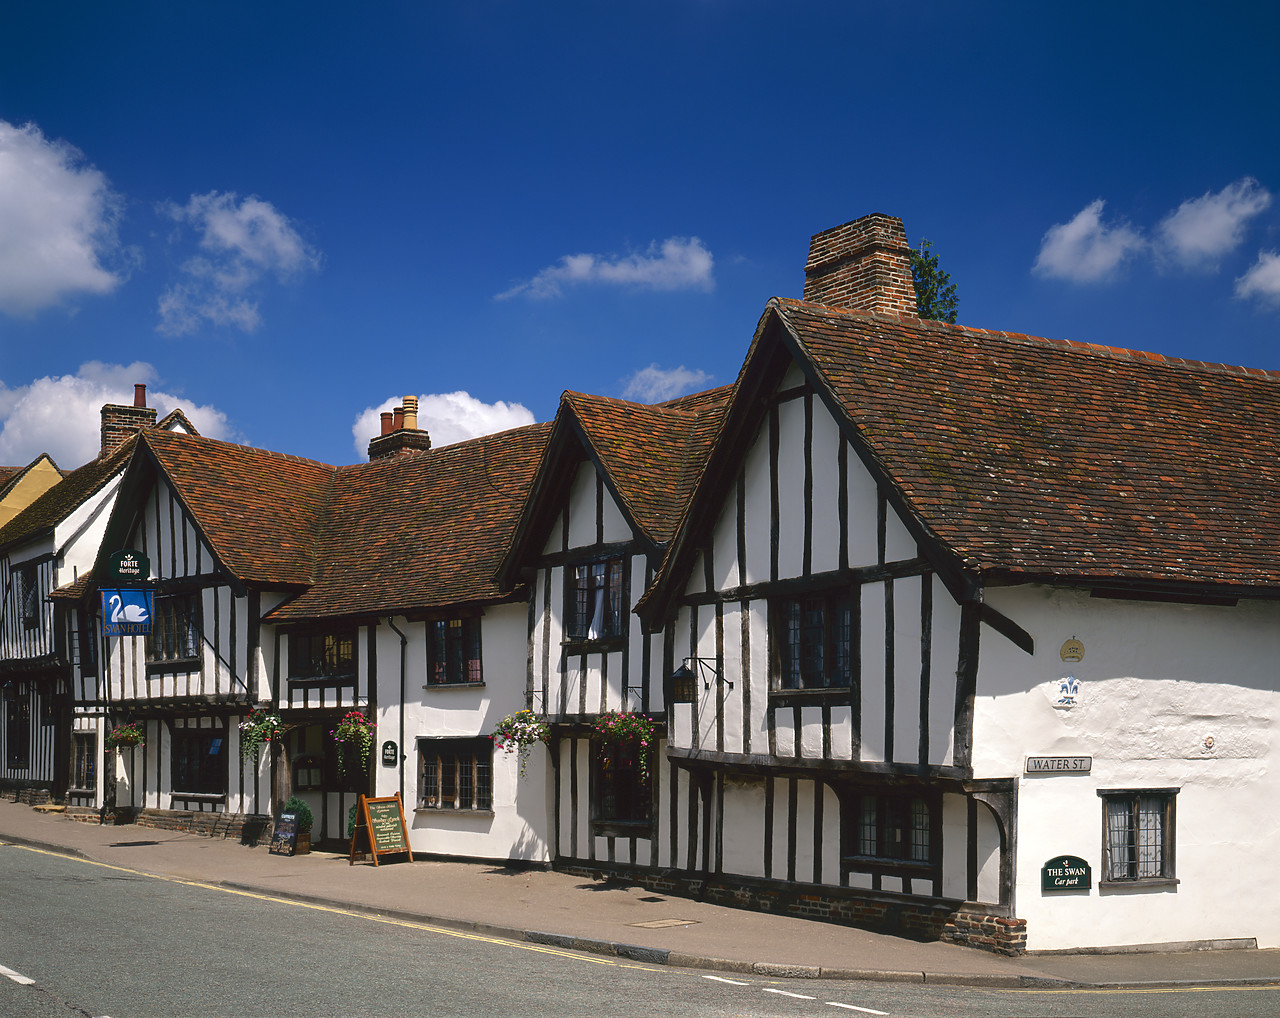 #970347-2 - The White Swan Hotel, Lavenham, Suffolk, England